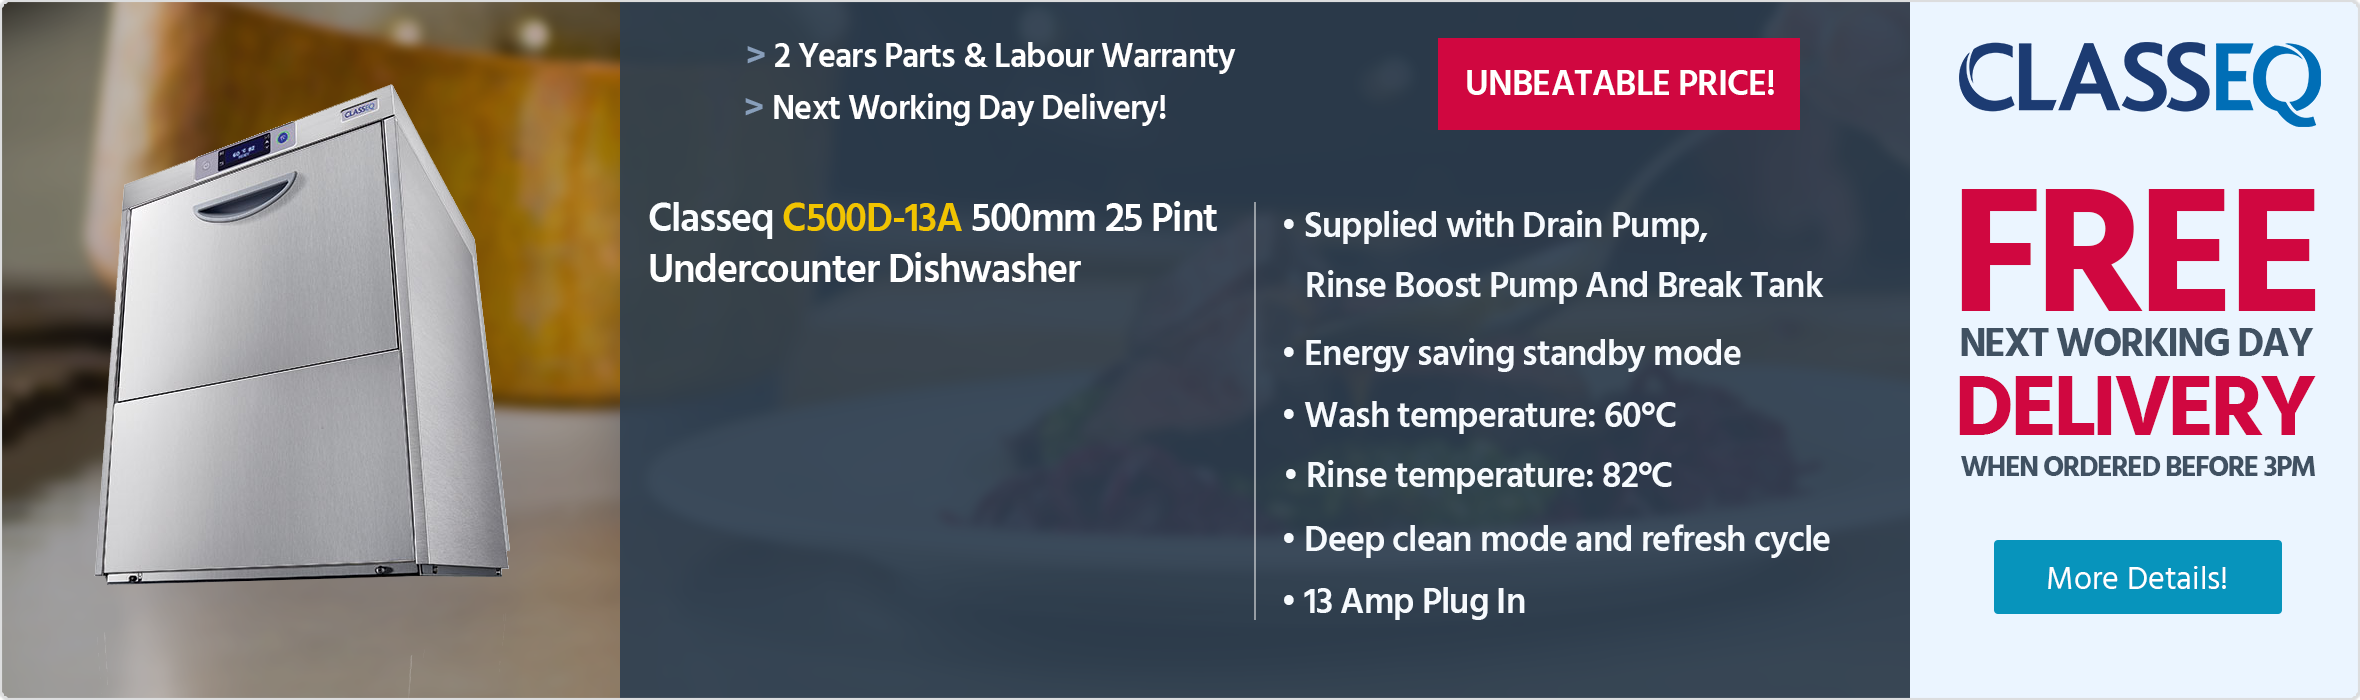 Classeq C500D-13A 500mm 18 Plate Undercounter Dishwasher With Drain Pump, Rinse Boost Pump And Break Tank - 13 Amp Plug In